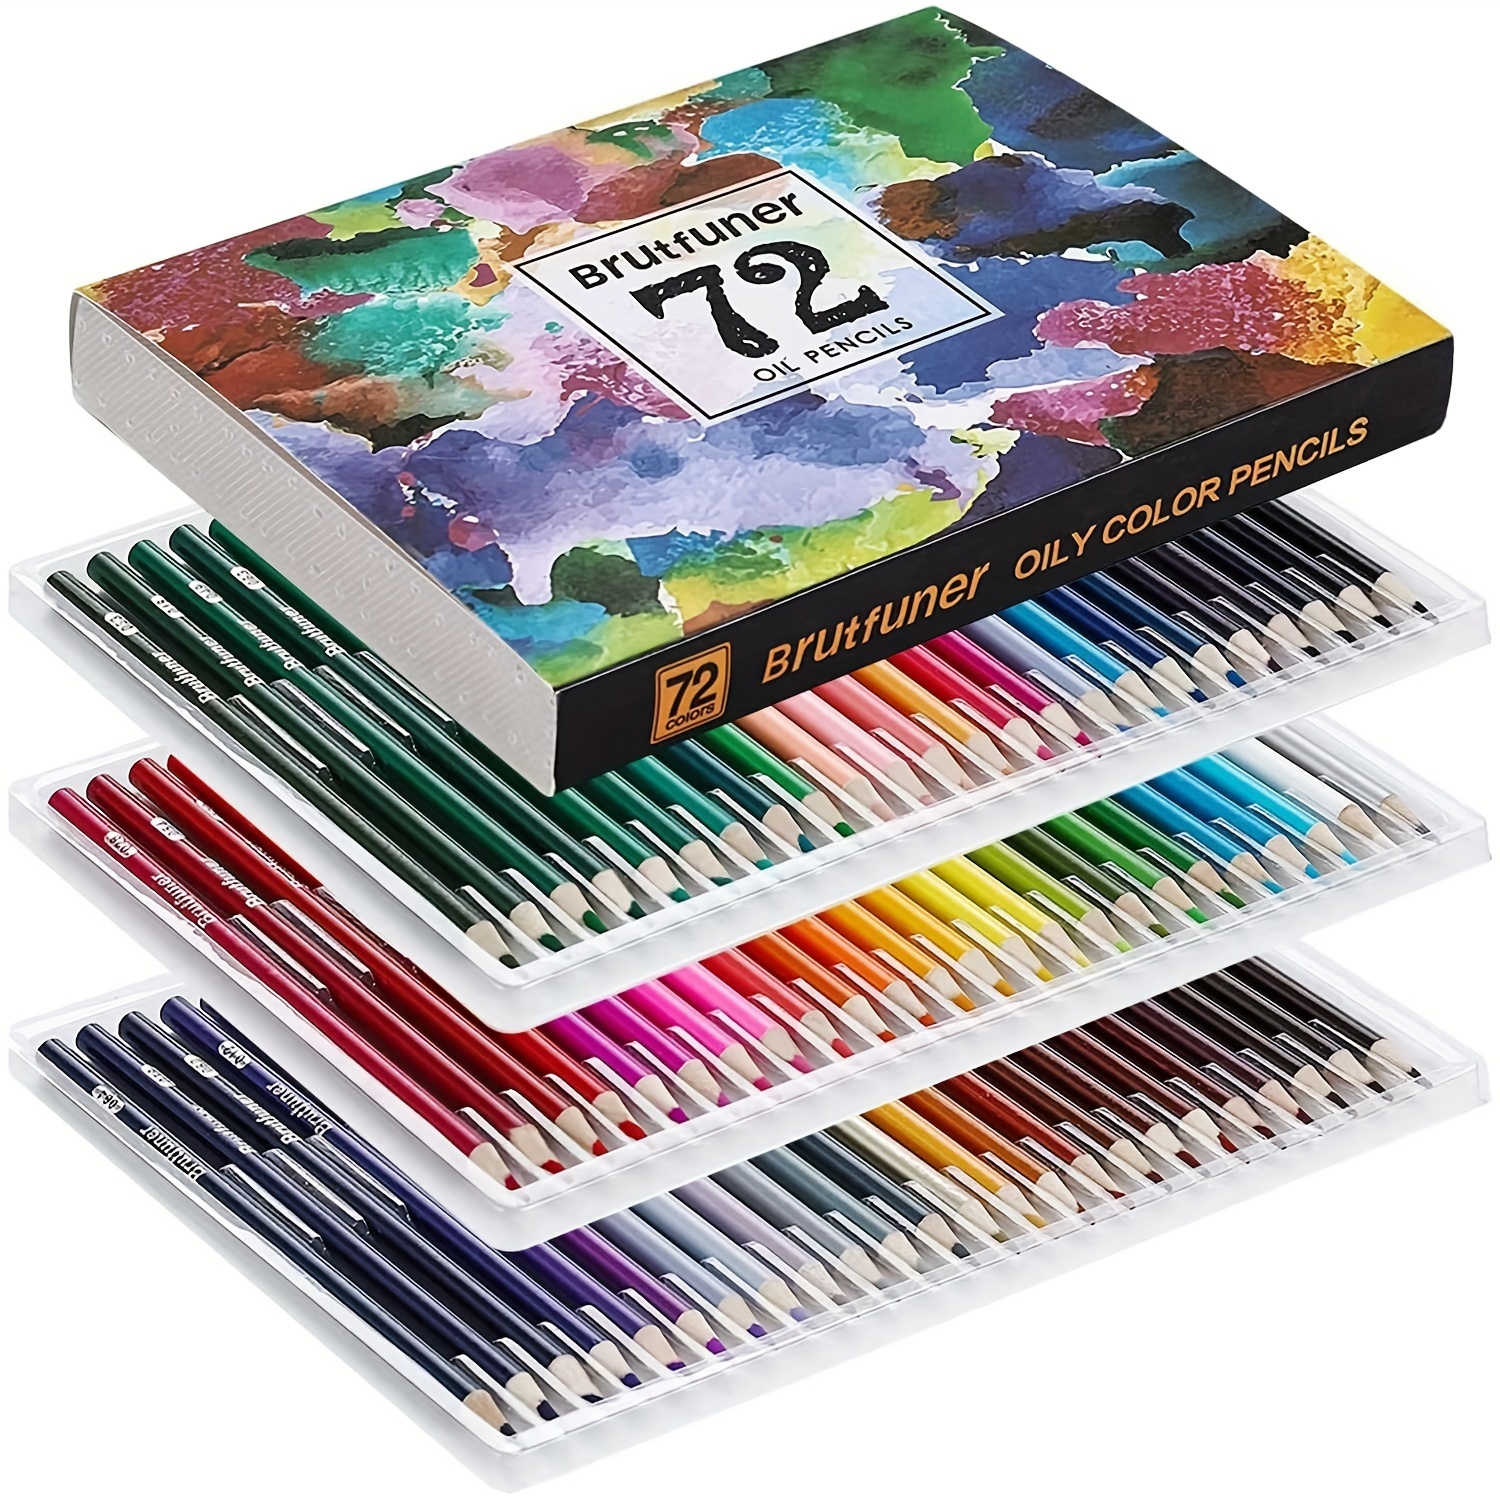 

72pcs Colored Pencils Oil Pencils Coloring Pencils Drawing Pencils Soft Cores Colored Pencils For Adult Coloring Books